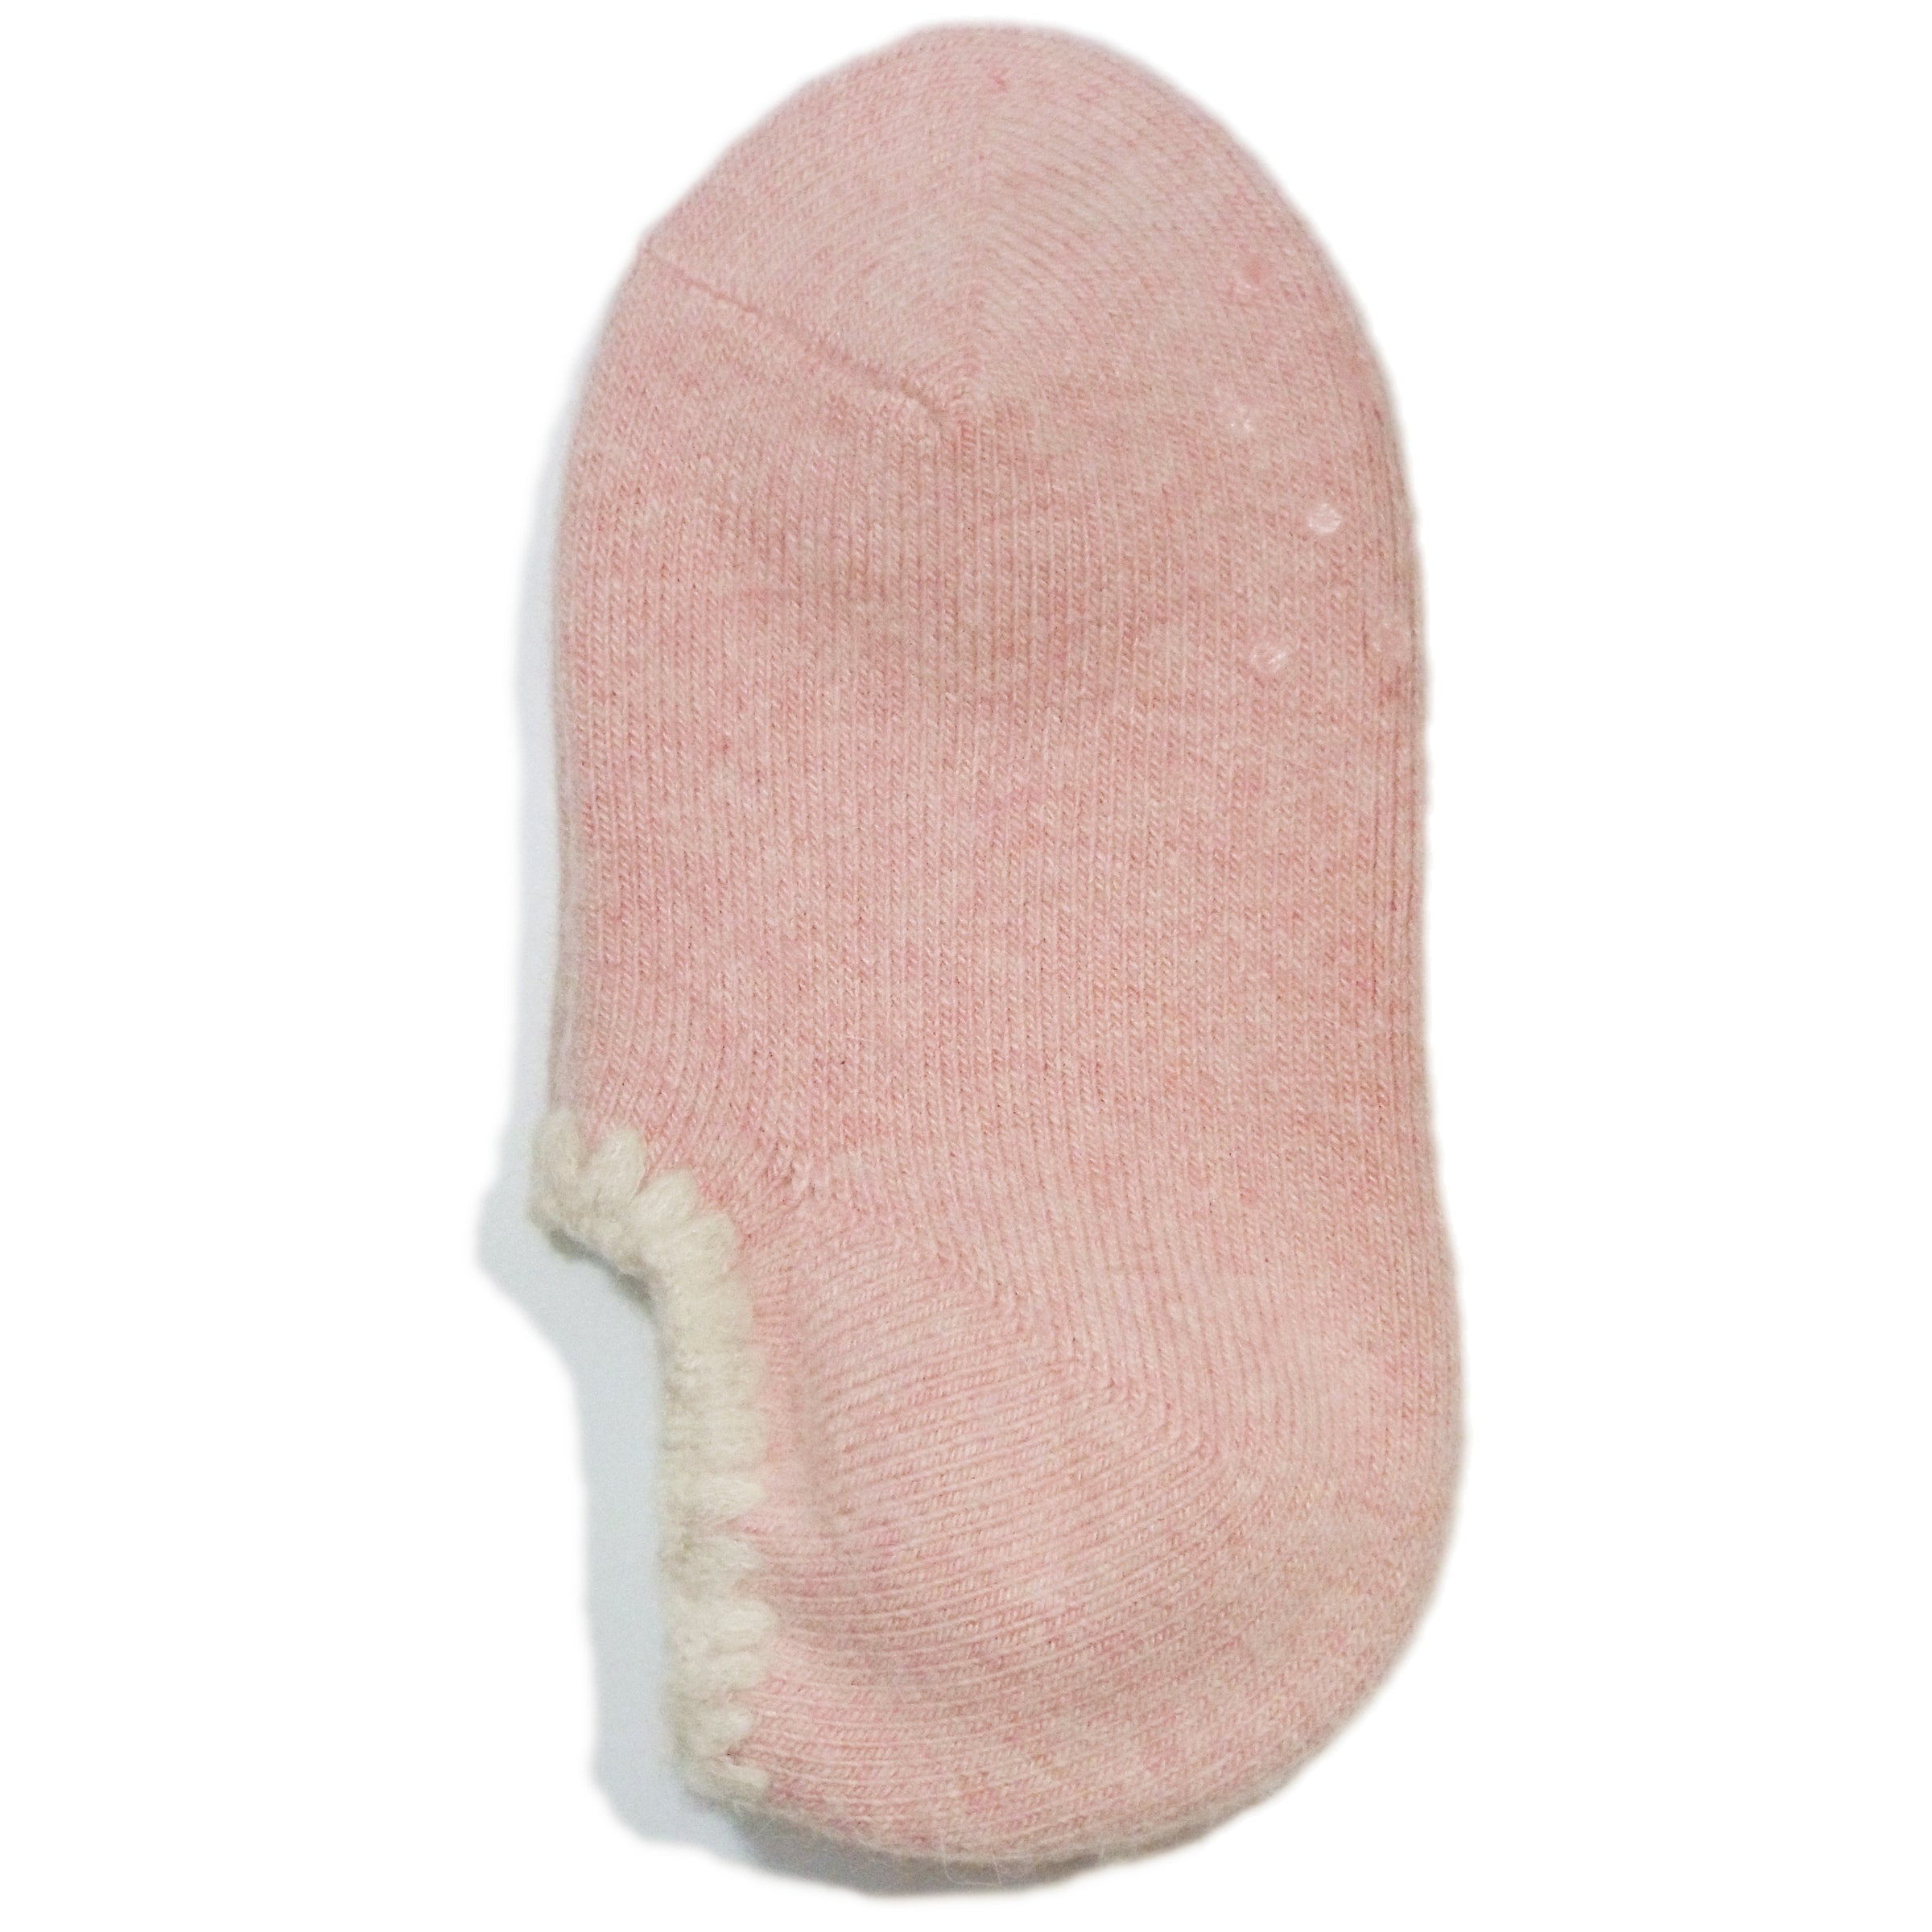 CHERRYSTONE: Comfy Handcrafted Slipper Socks & Gifts – CHERRYSTONEstyle